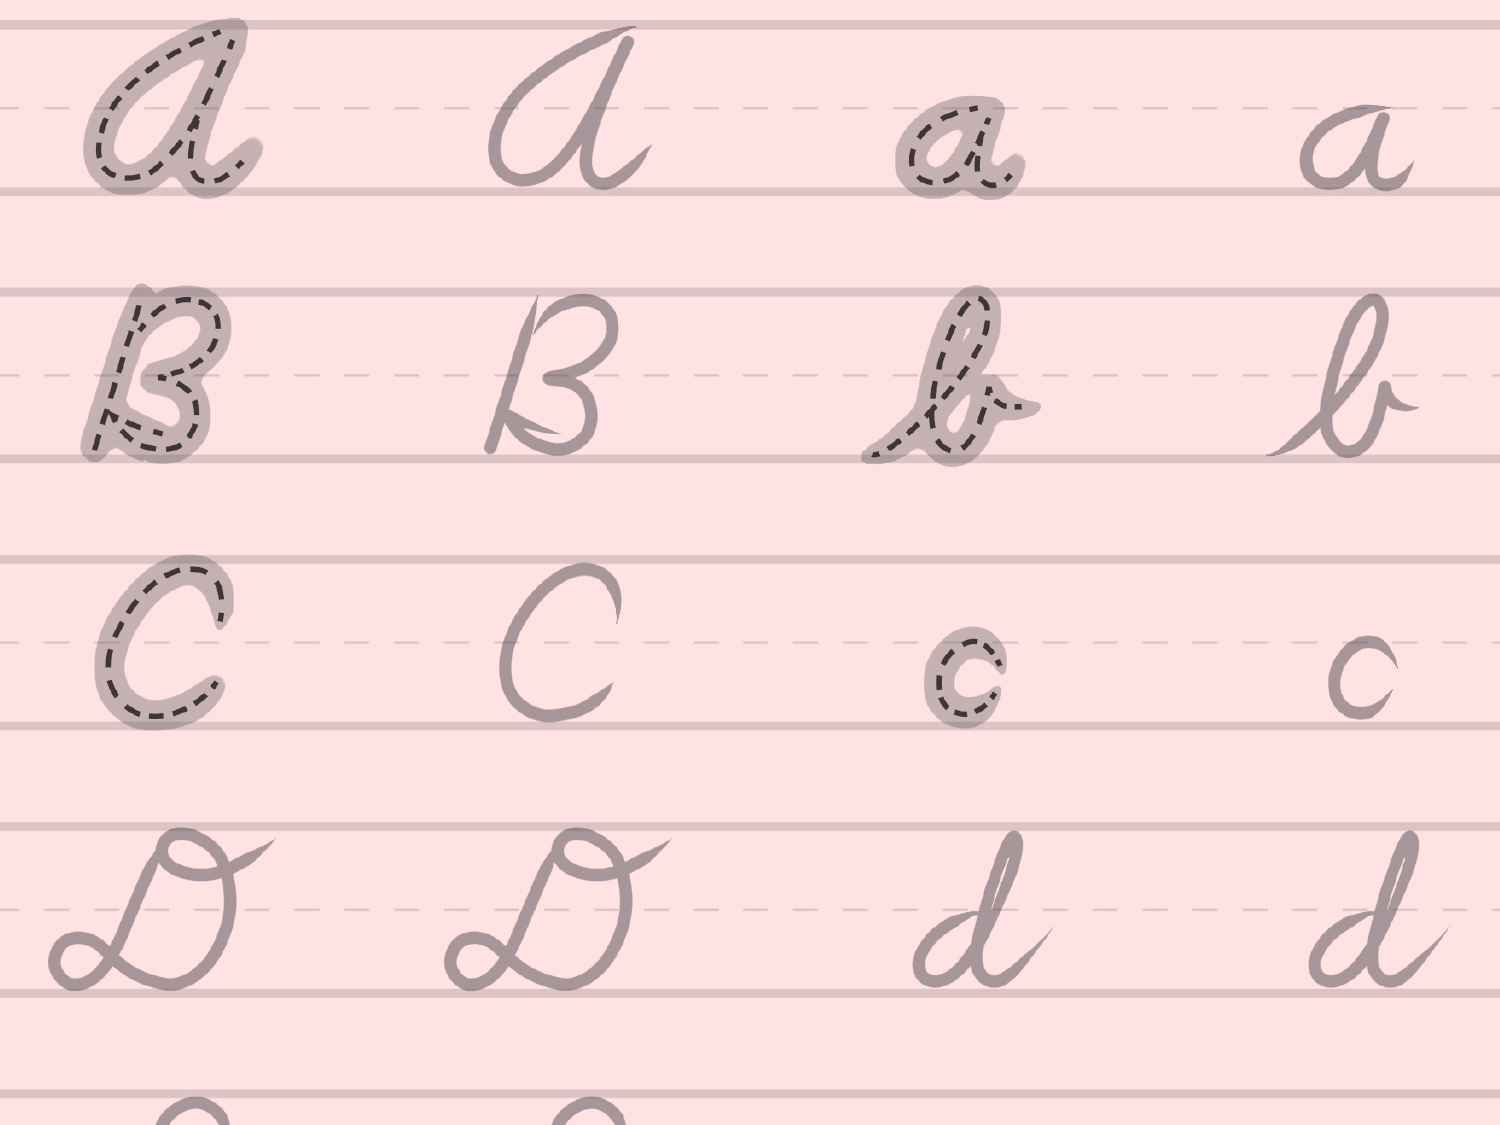 Writing Practice: Cursive Letters